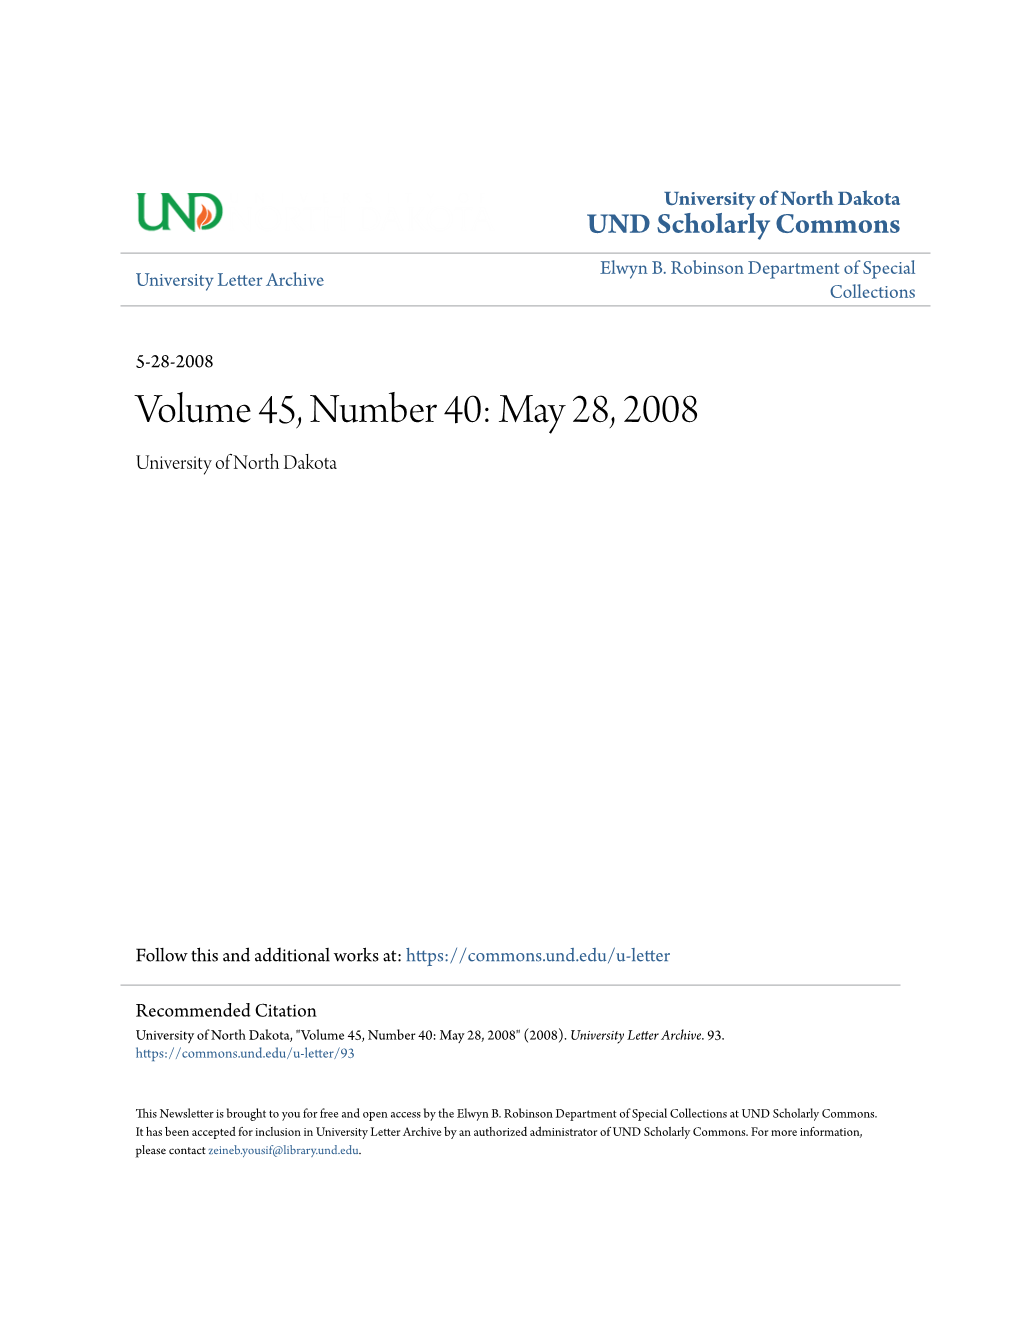 Volume 45, Number 40: May 28, 2008 University of North Dakota